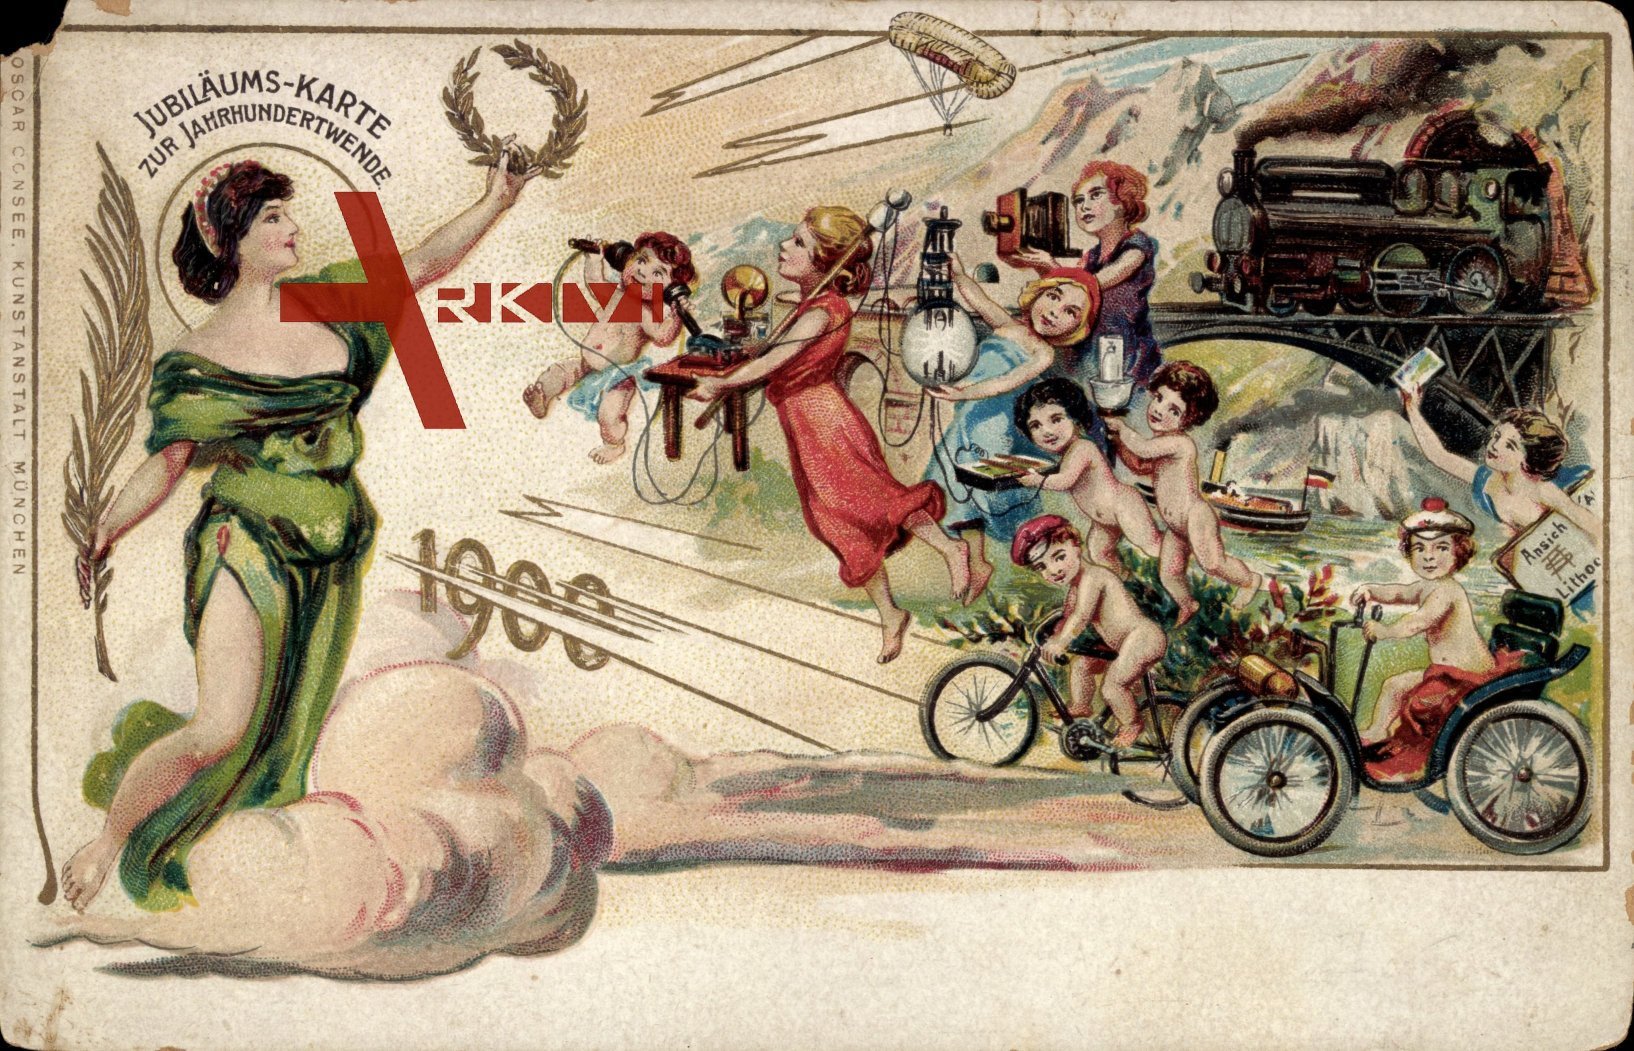 Zukunft Jubiläumskarte, Jahrhundertwende 1900, Telefon, Auto,Fahrrad